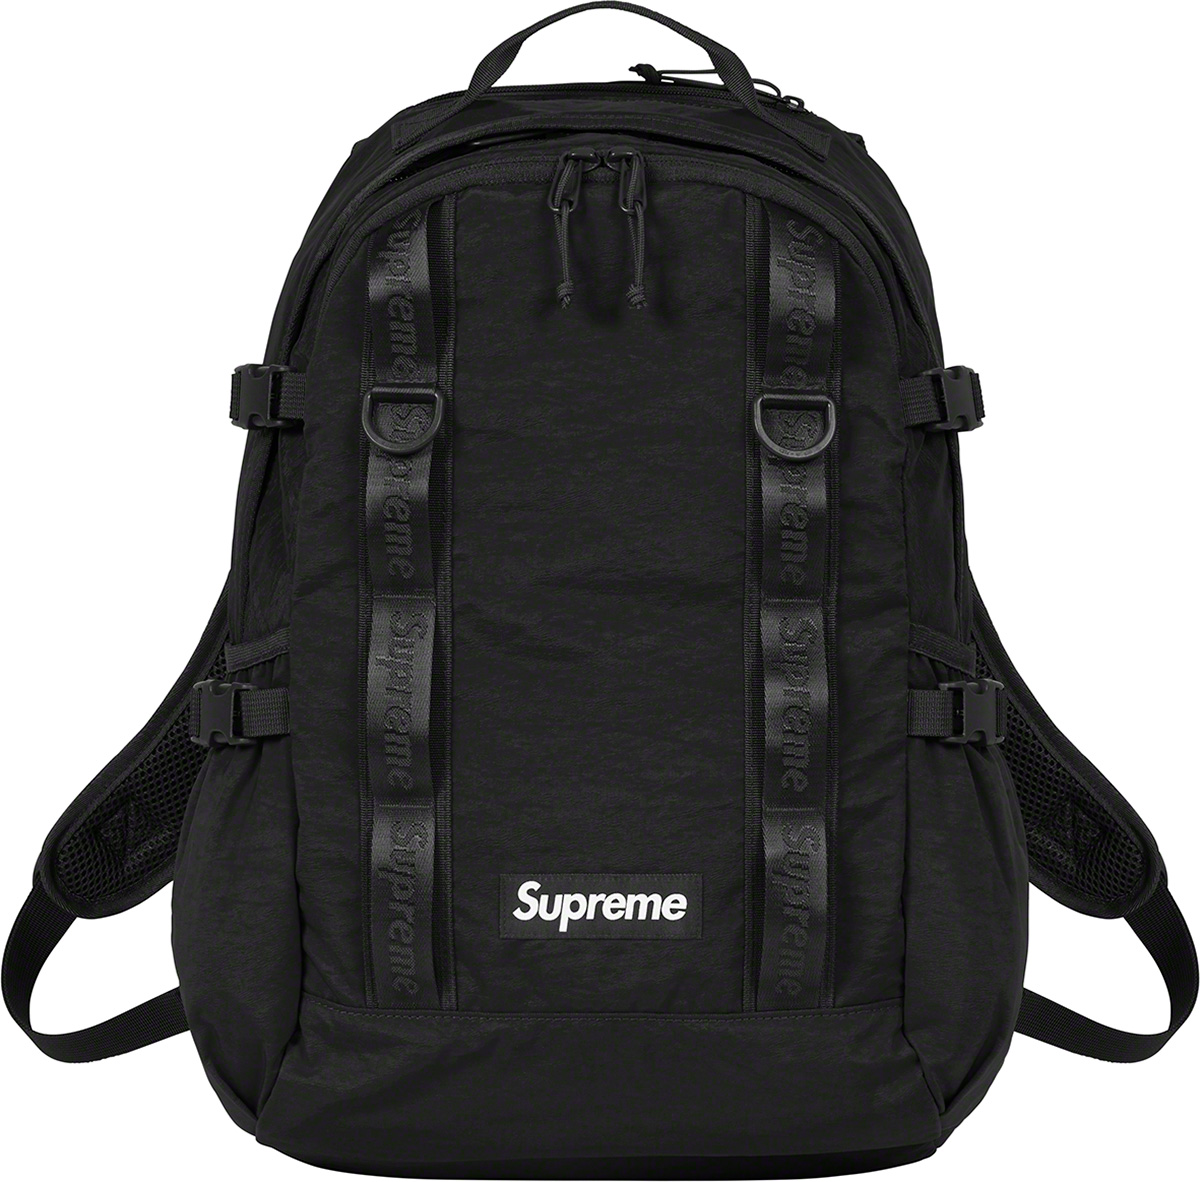 Backpack - fall winter 2020 - Supreme